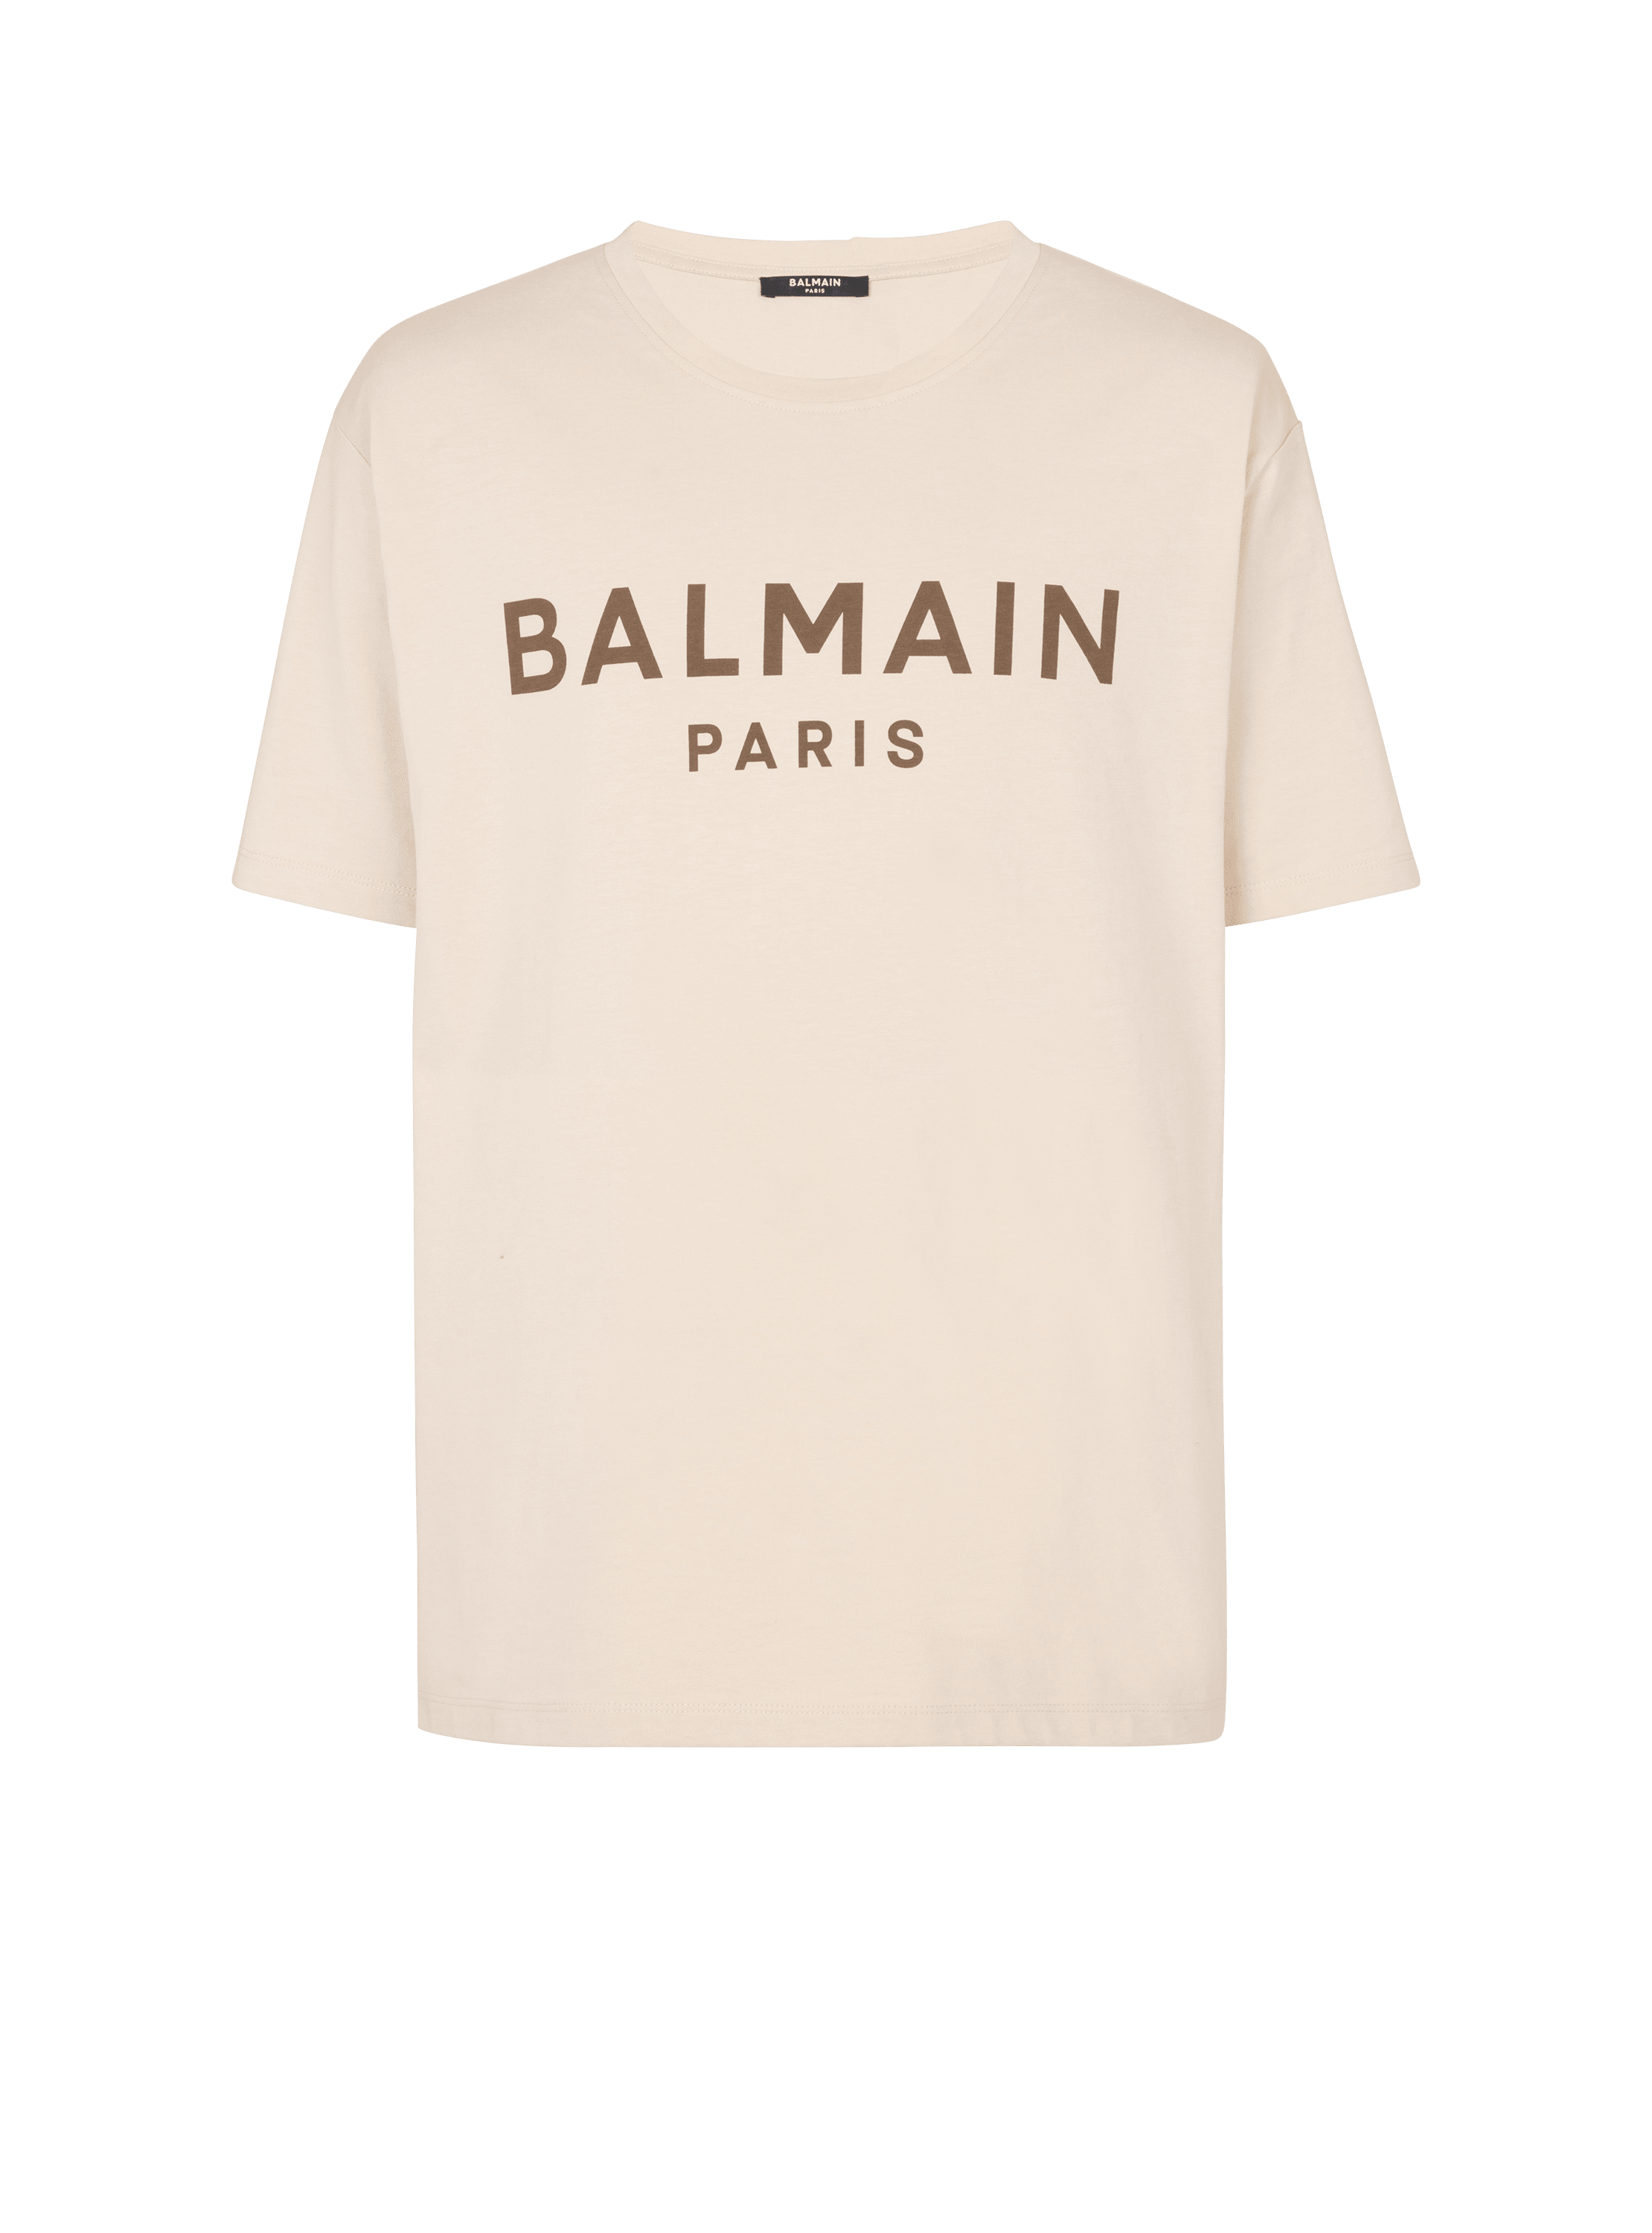 BALMAIN Tシャツ - www.sorbillomenu.com